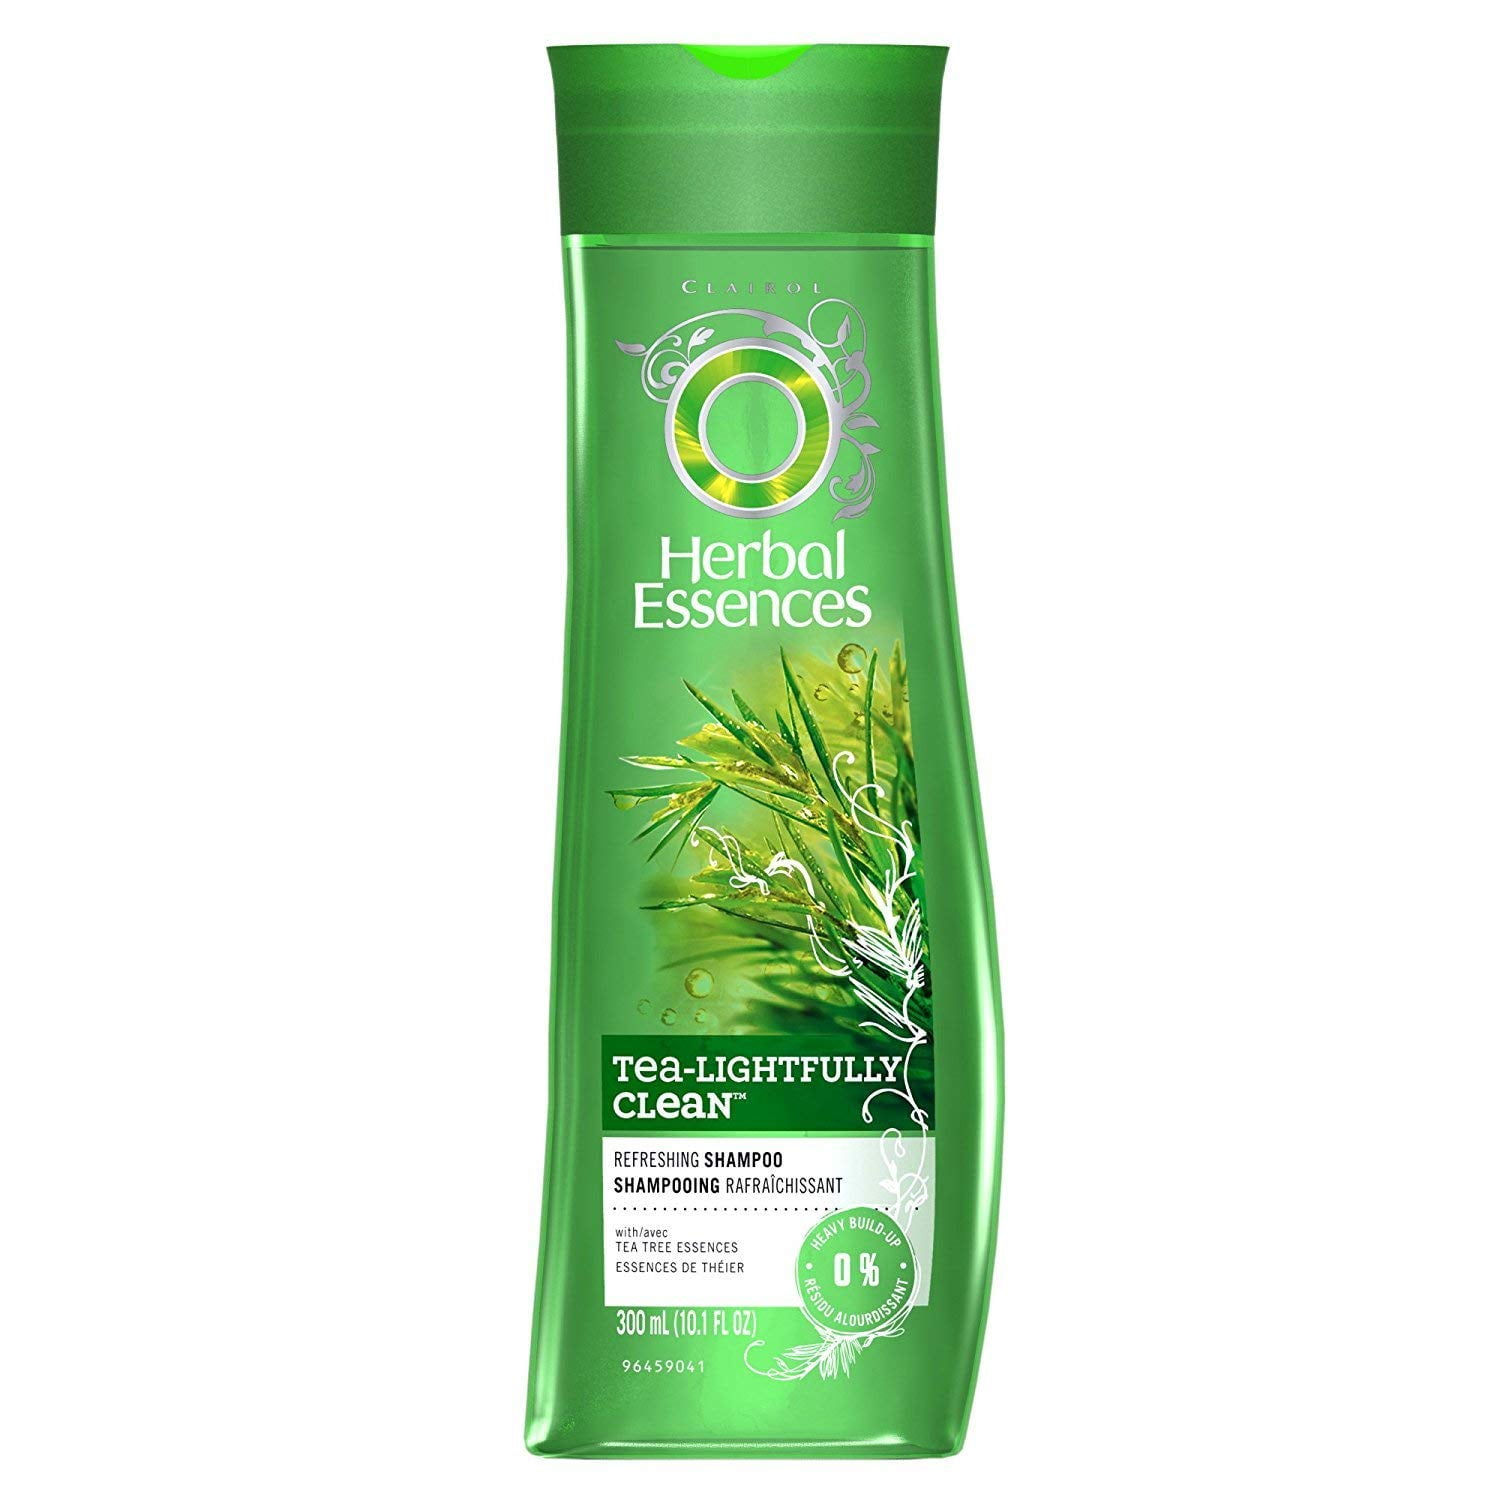 Herbal Essences Tea-Lightfully Clean Refreshing Shampoo 10.1 FL OZ